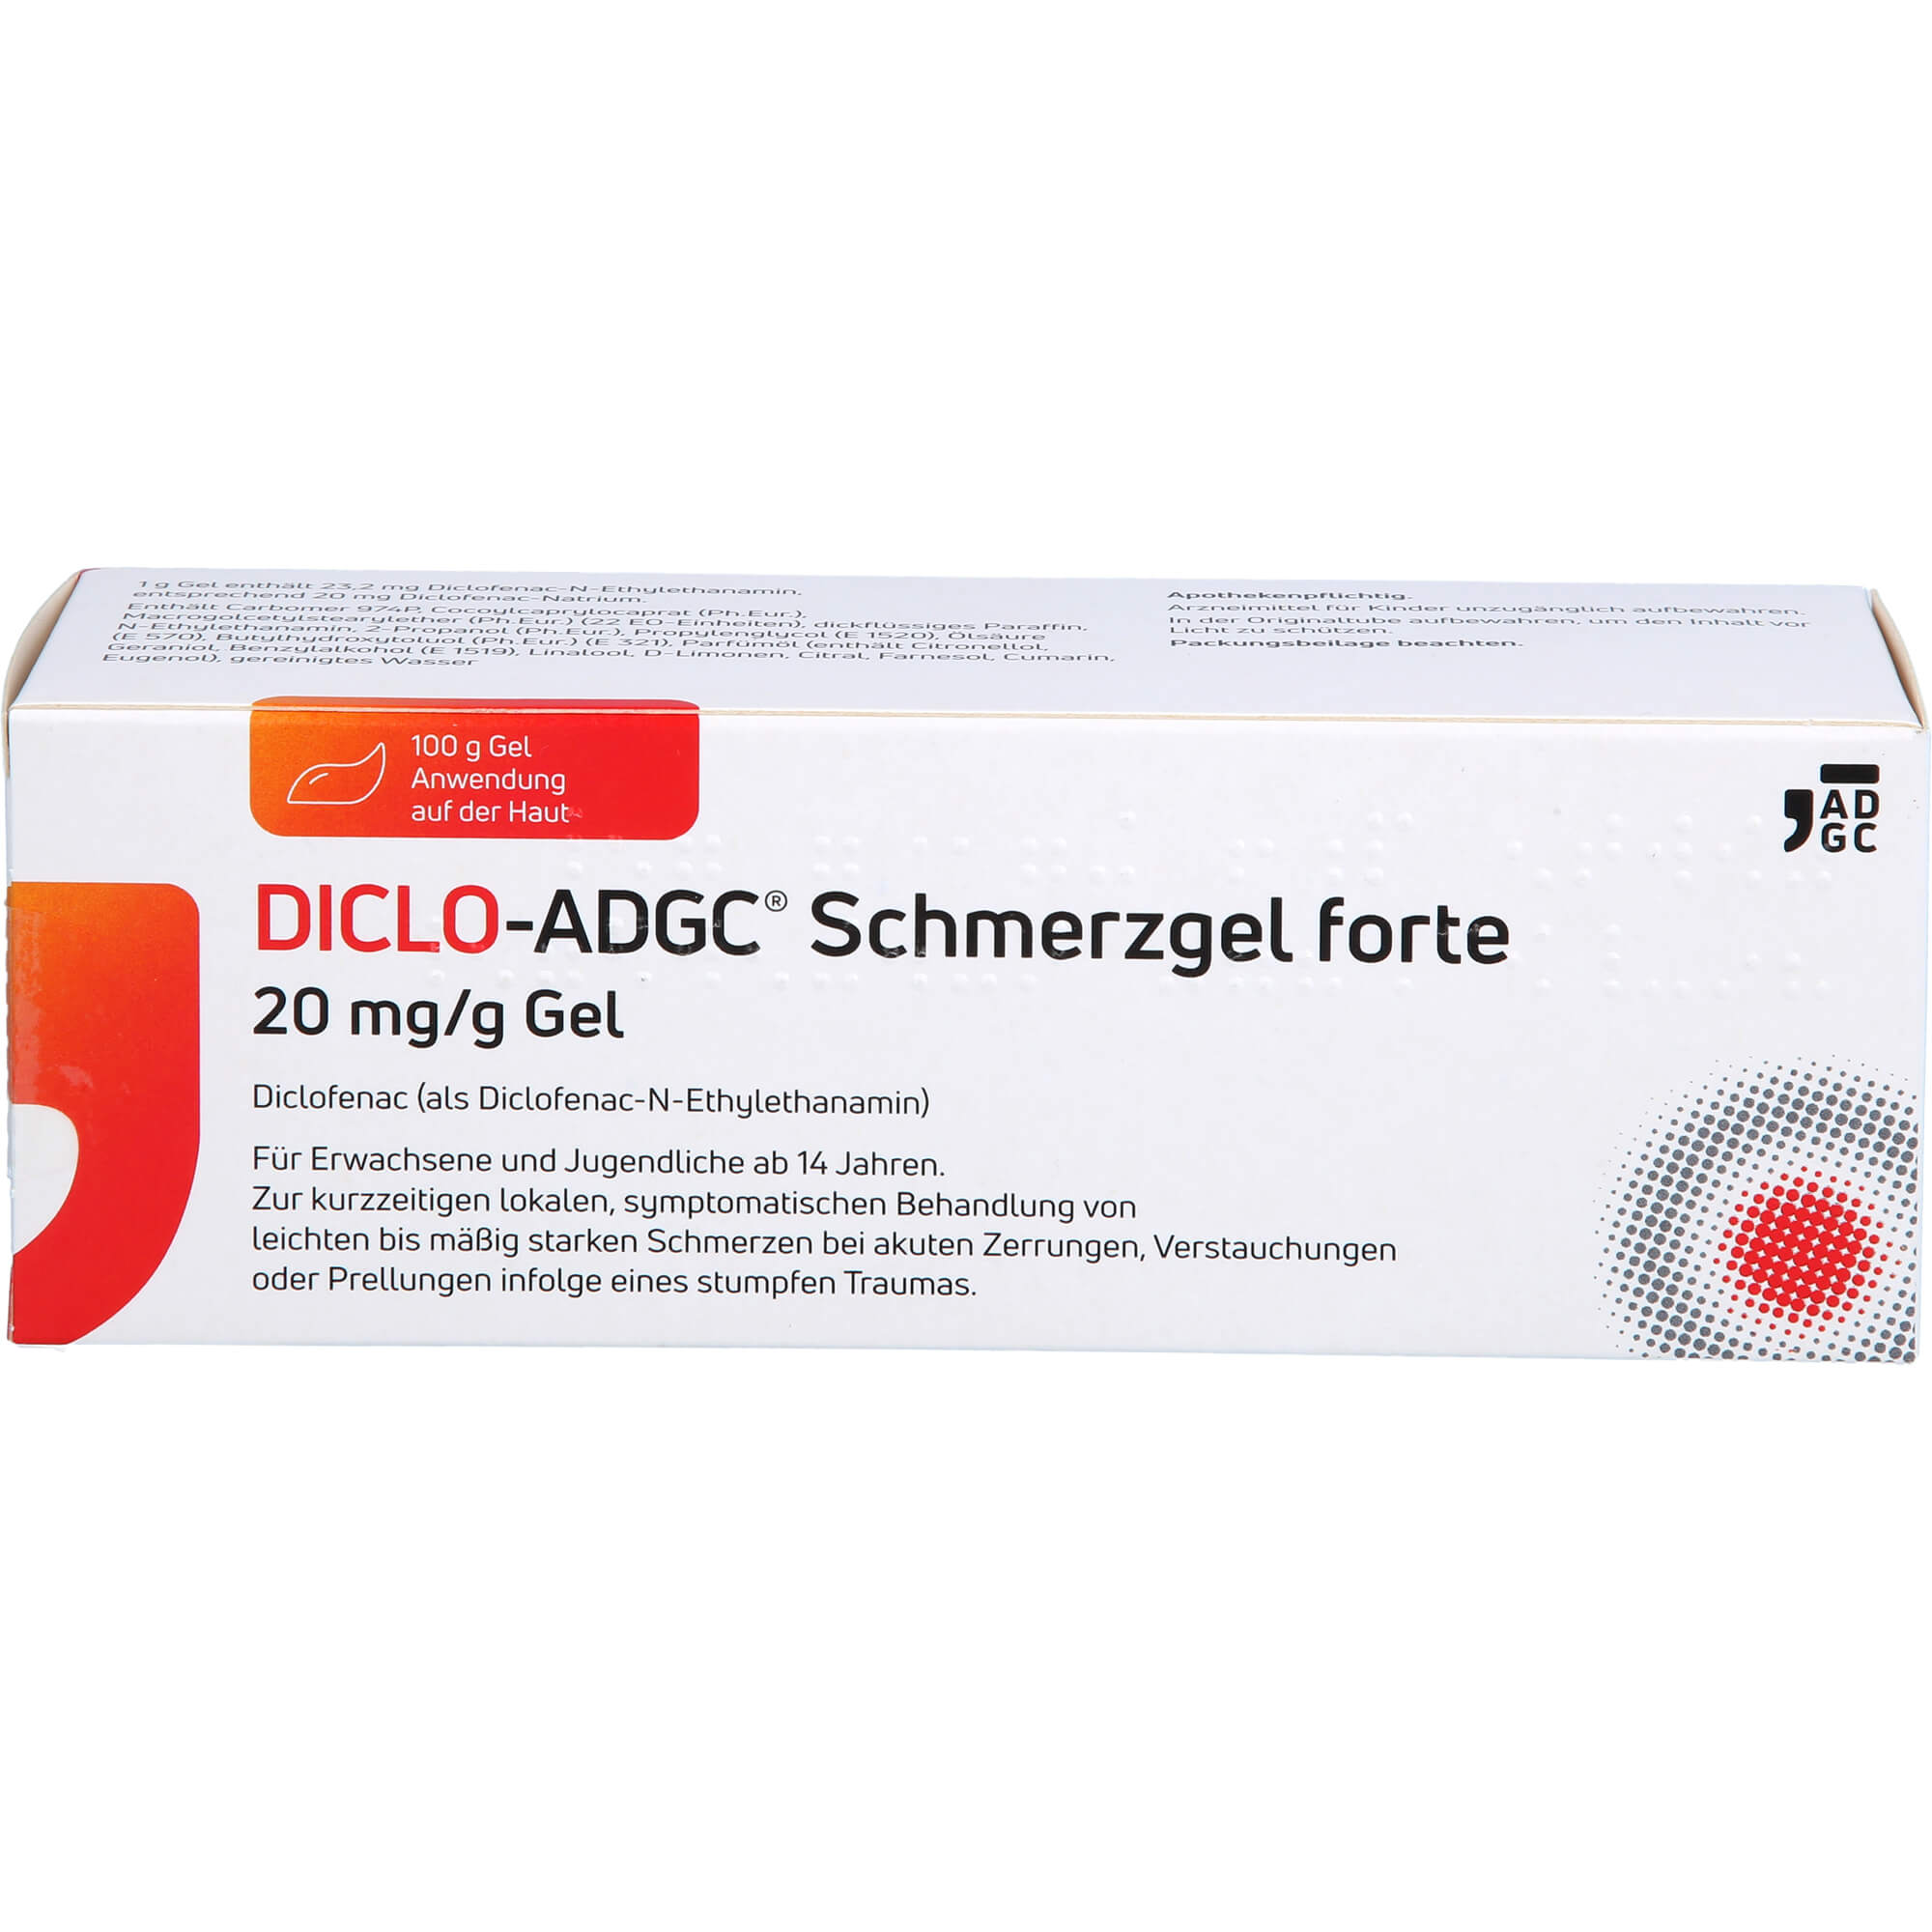 DICLO-ADGC Schmerzgel forte 20 mg/g